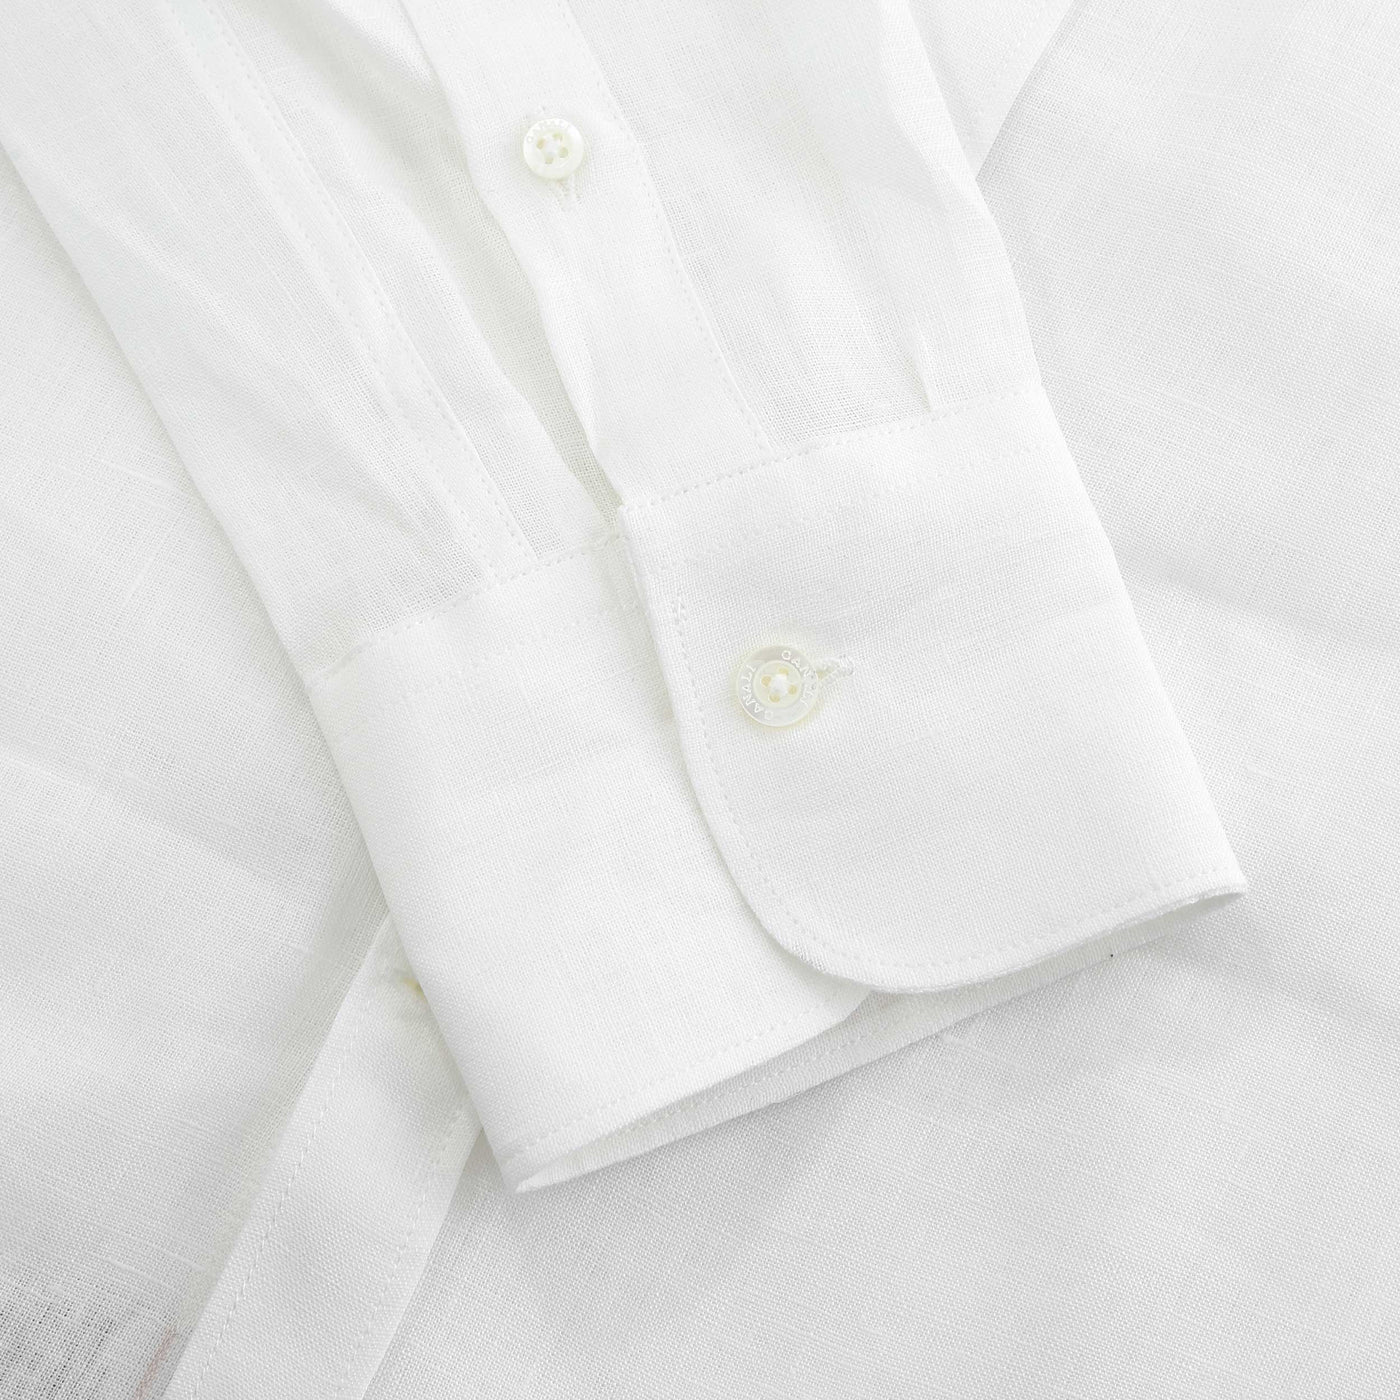 Canali Linen Shirt in White Cuff